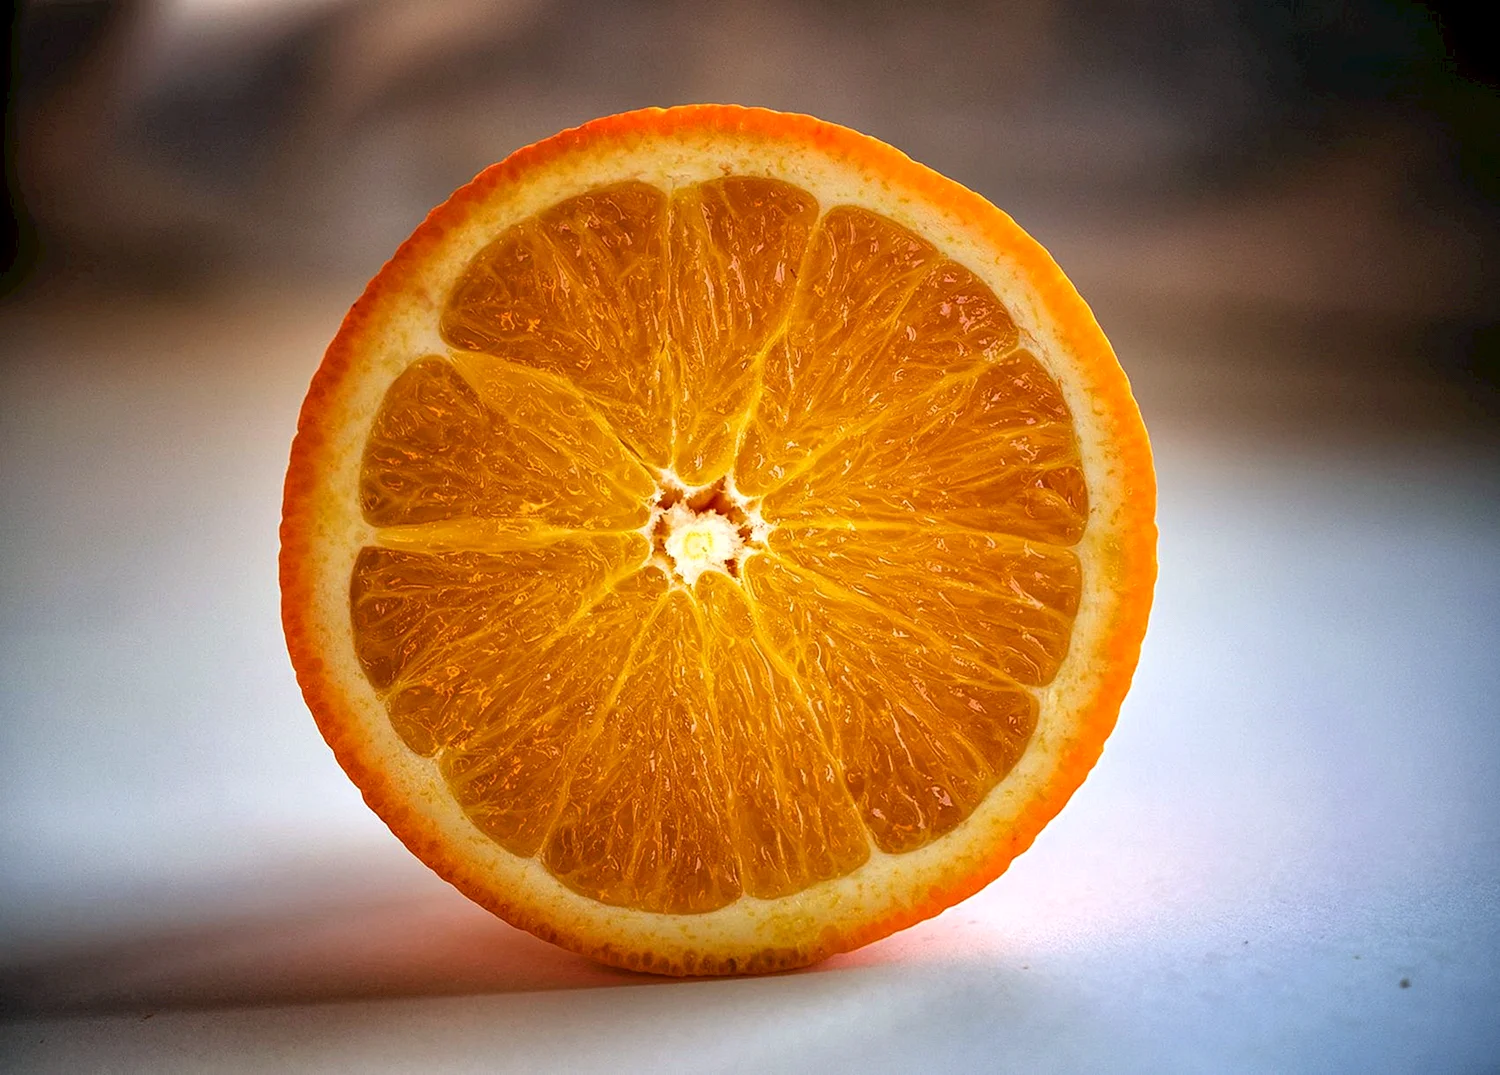 Померанец цвета оранж